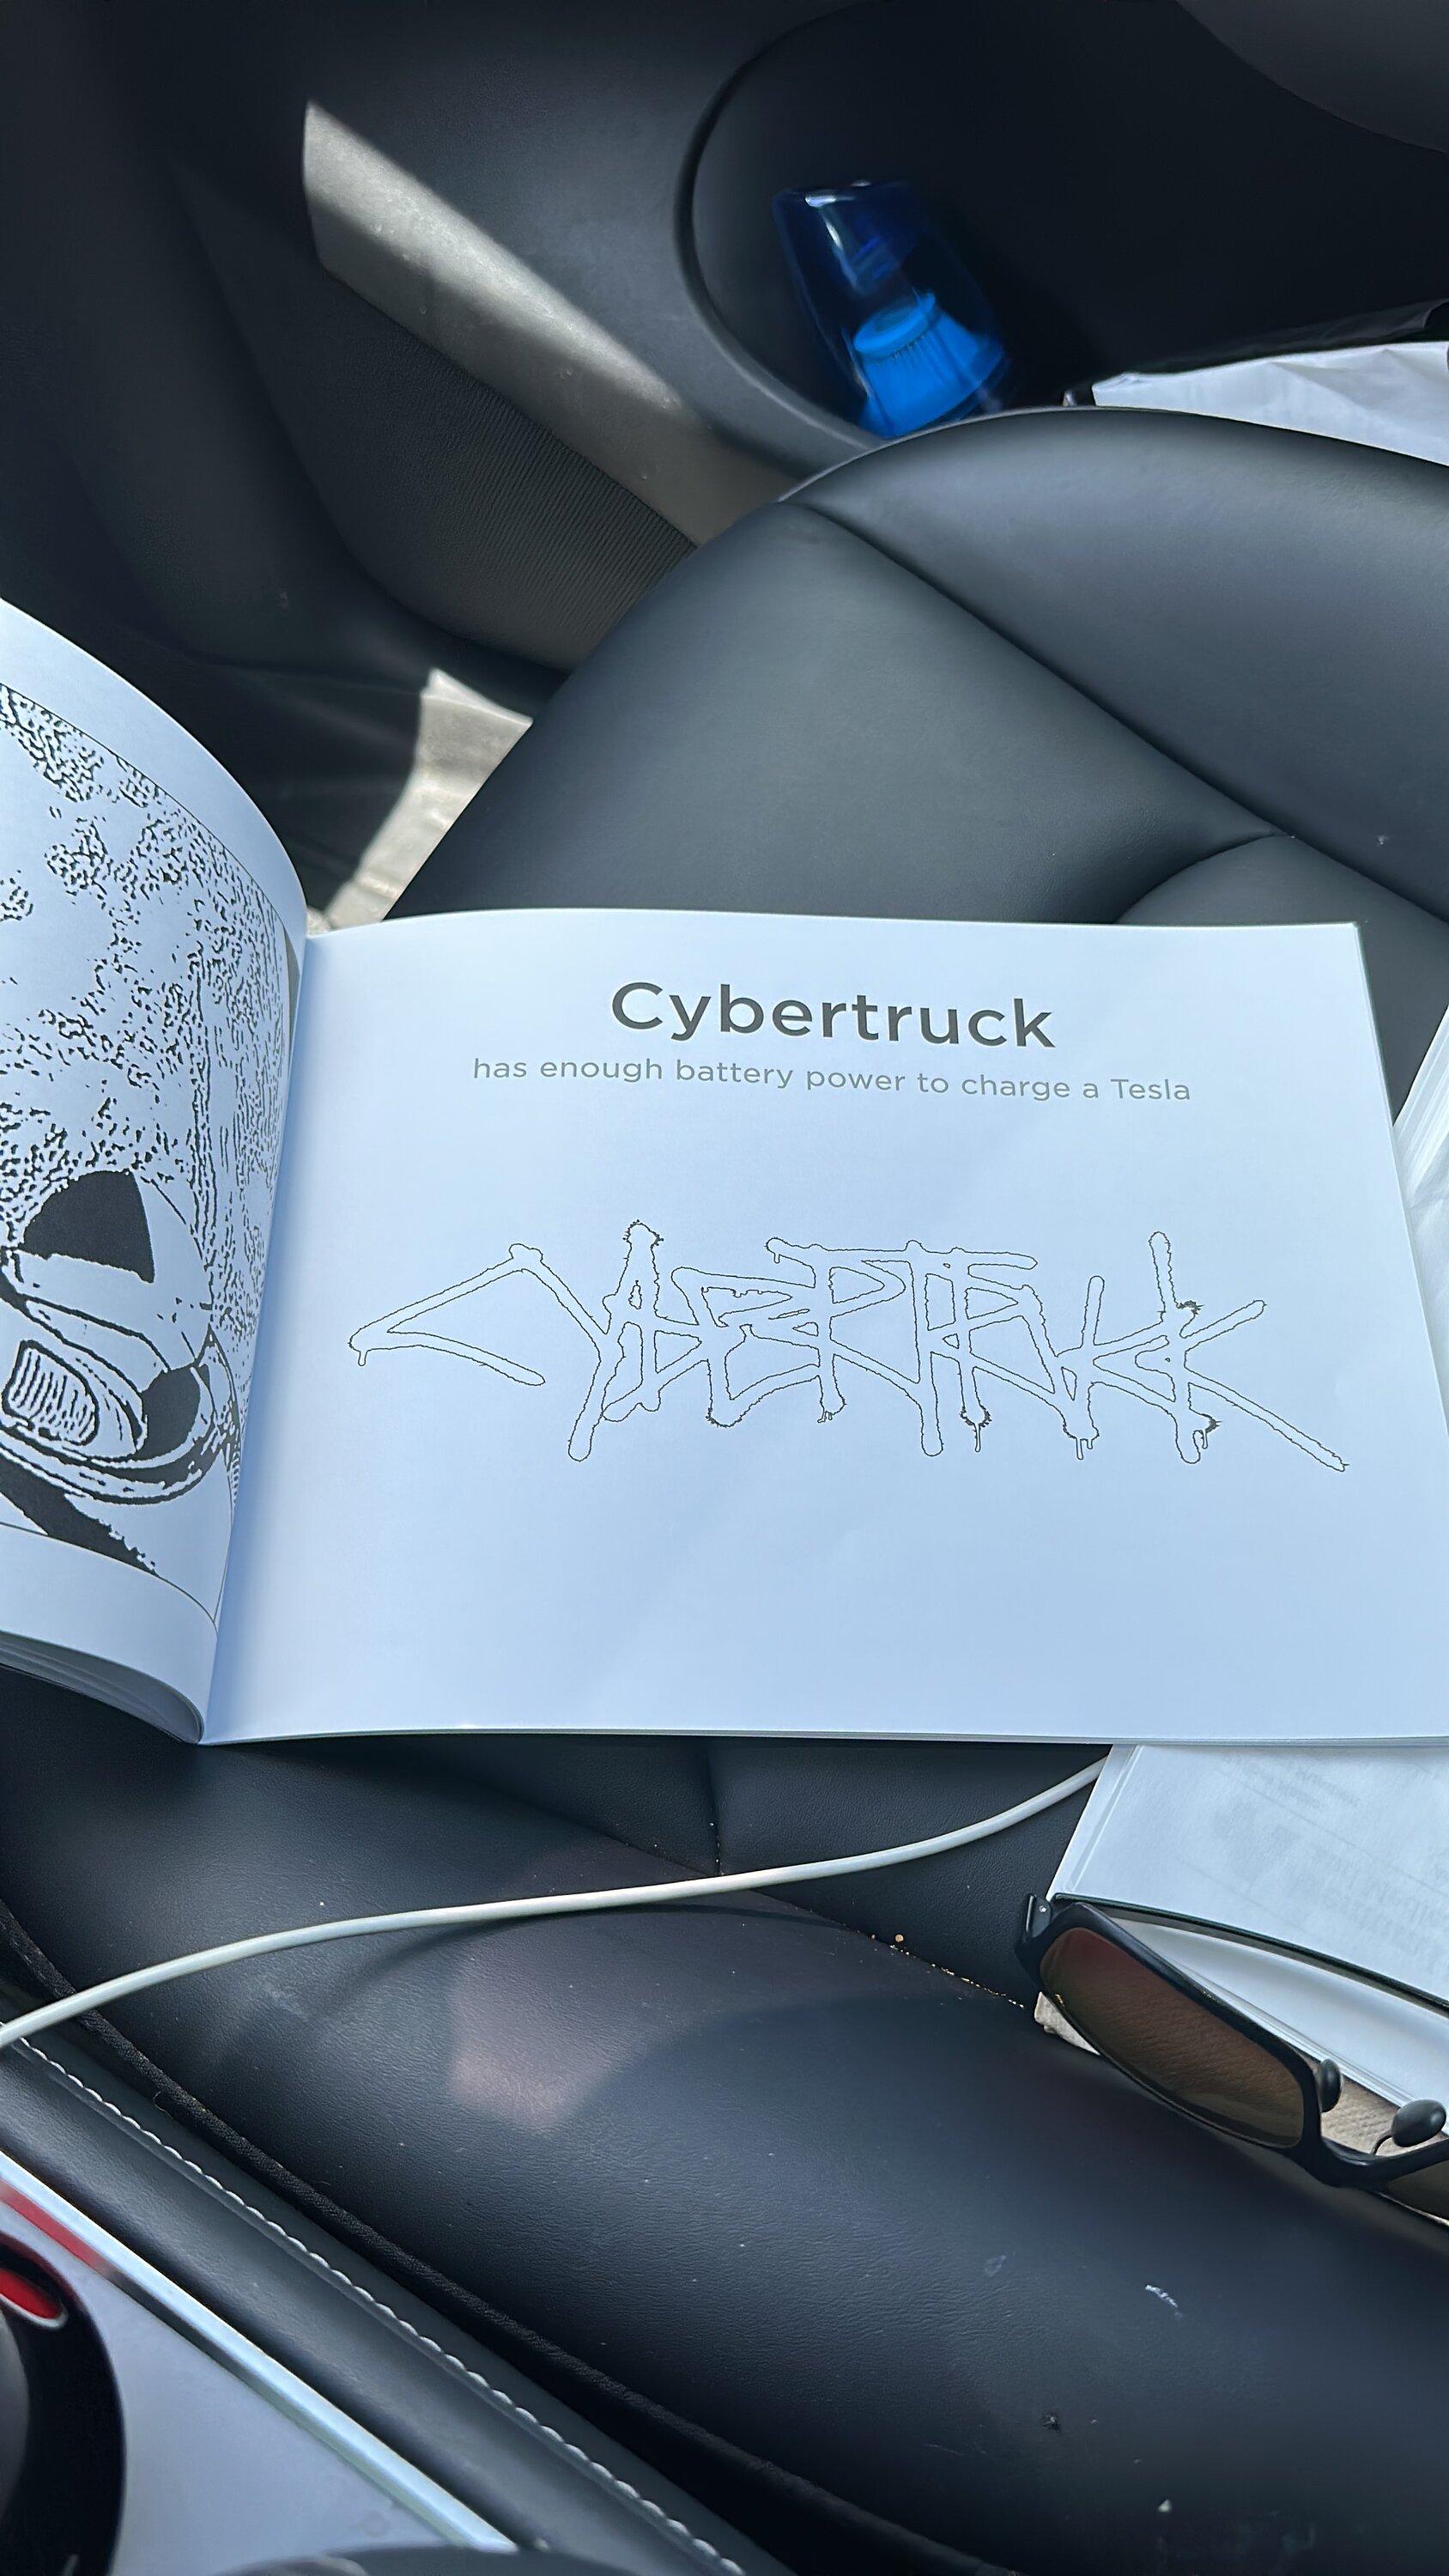 Tesla Cybertruck Cybertruck V2V Bidirectional Charging Confirmed in new Tesla service center coloring books? 2F3D2461-0922-4A29-A269-17FE340E9983